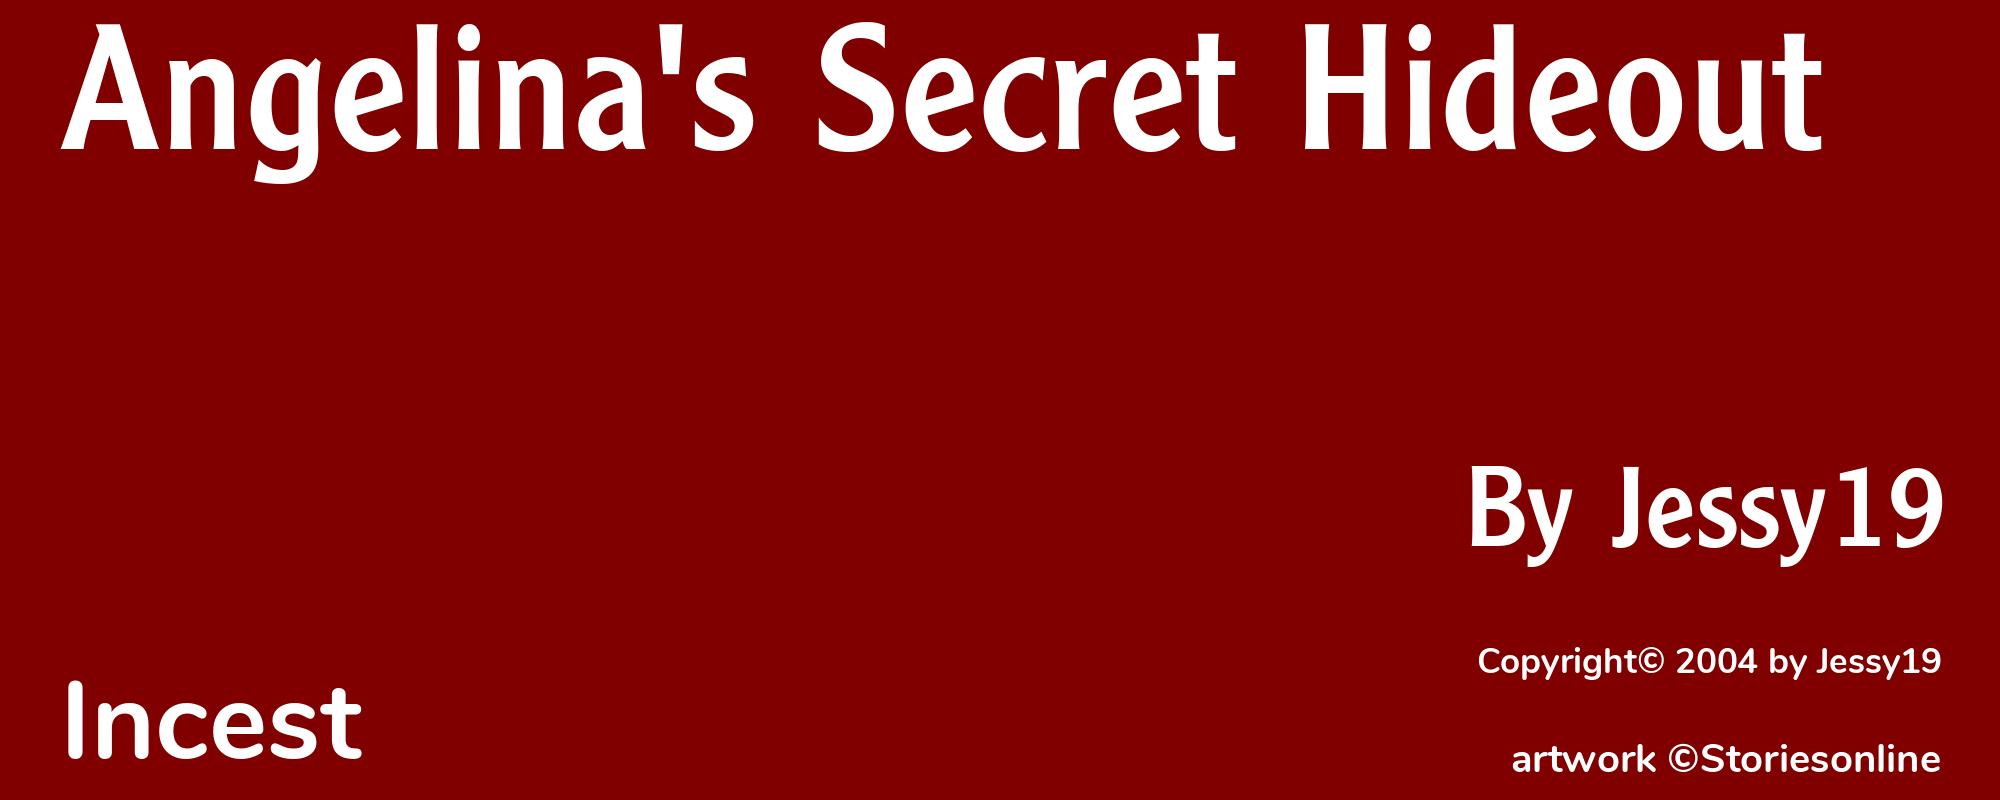 Angelina's Secret Hideout - Cover